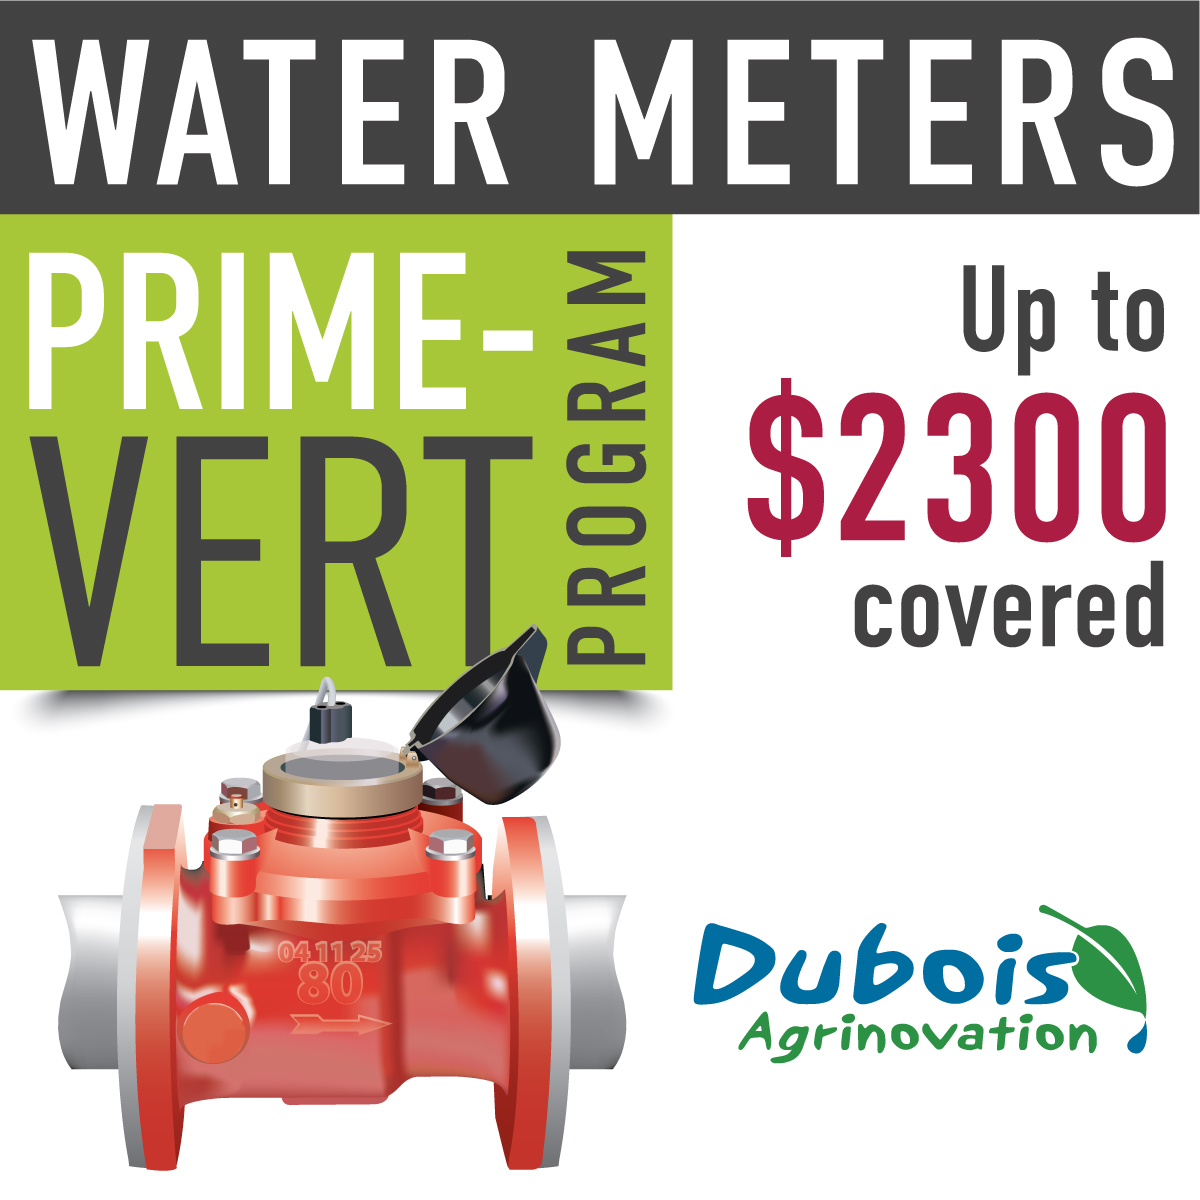 Get your water meters FREE!